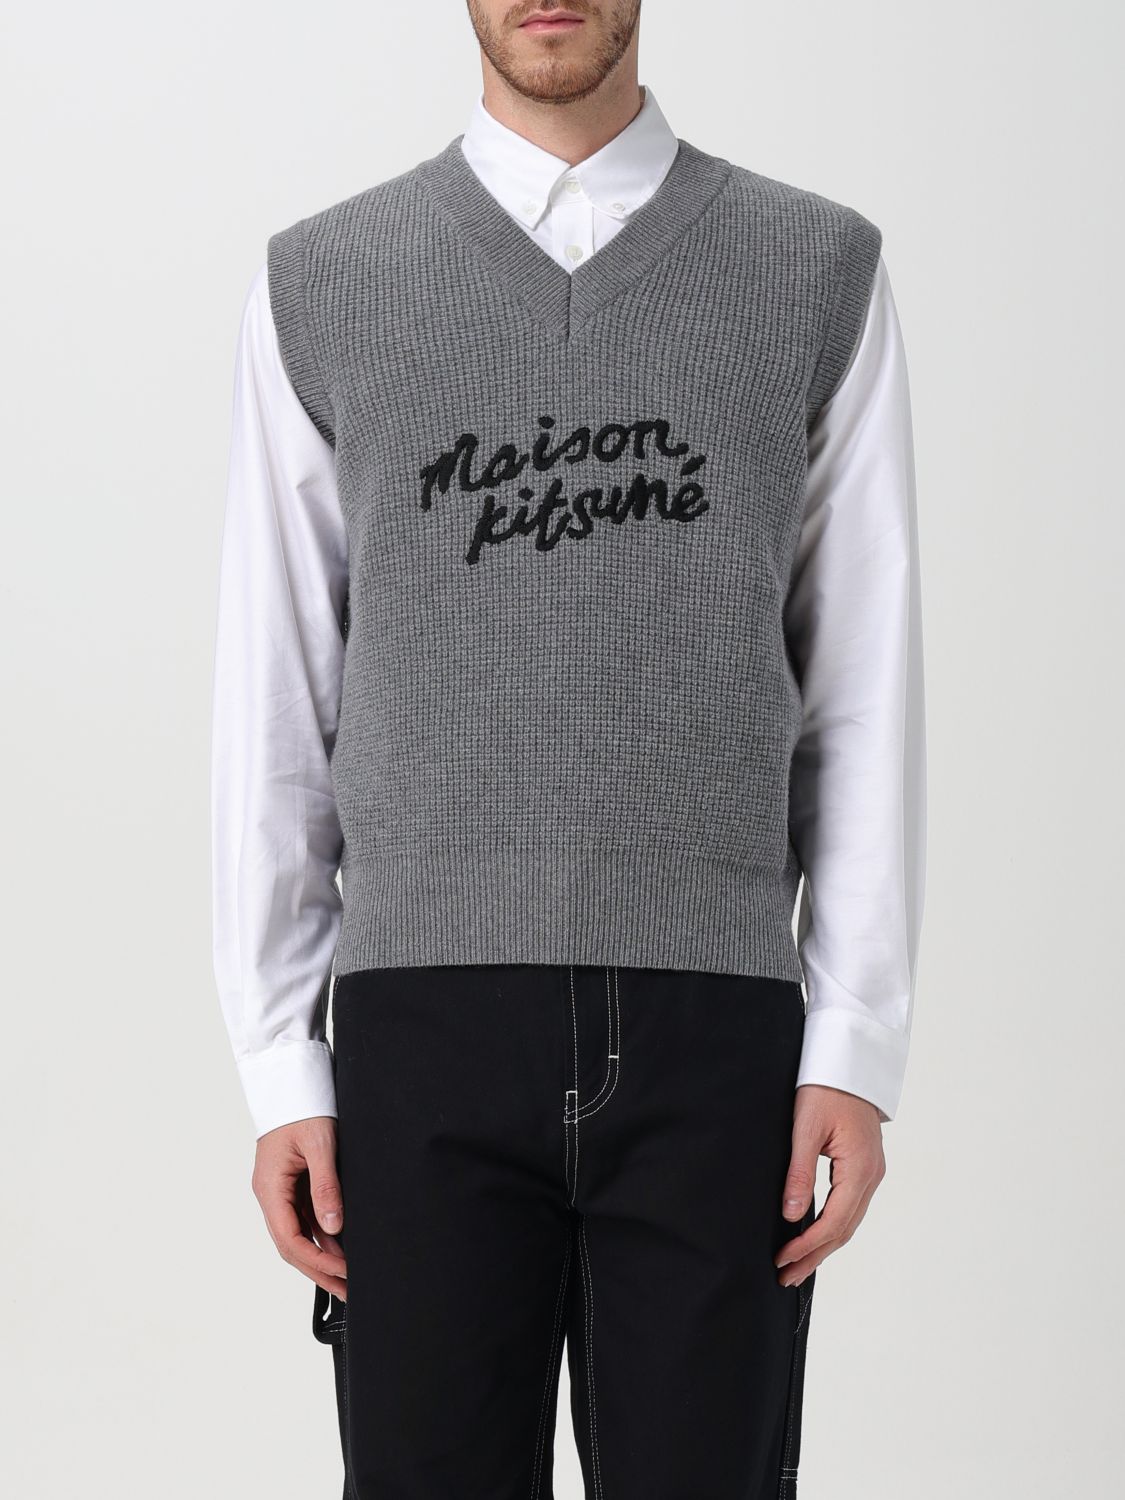 Maison Kitsuné Sweater MAISON KITSUNÉ Men color Grey